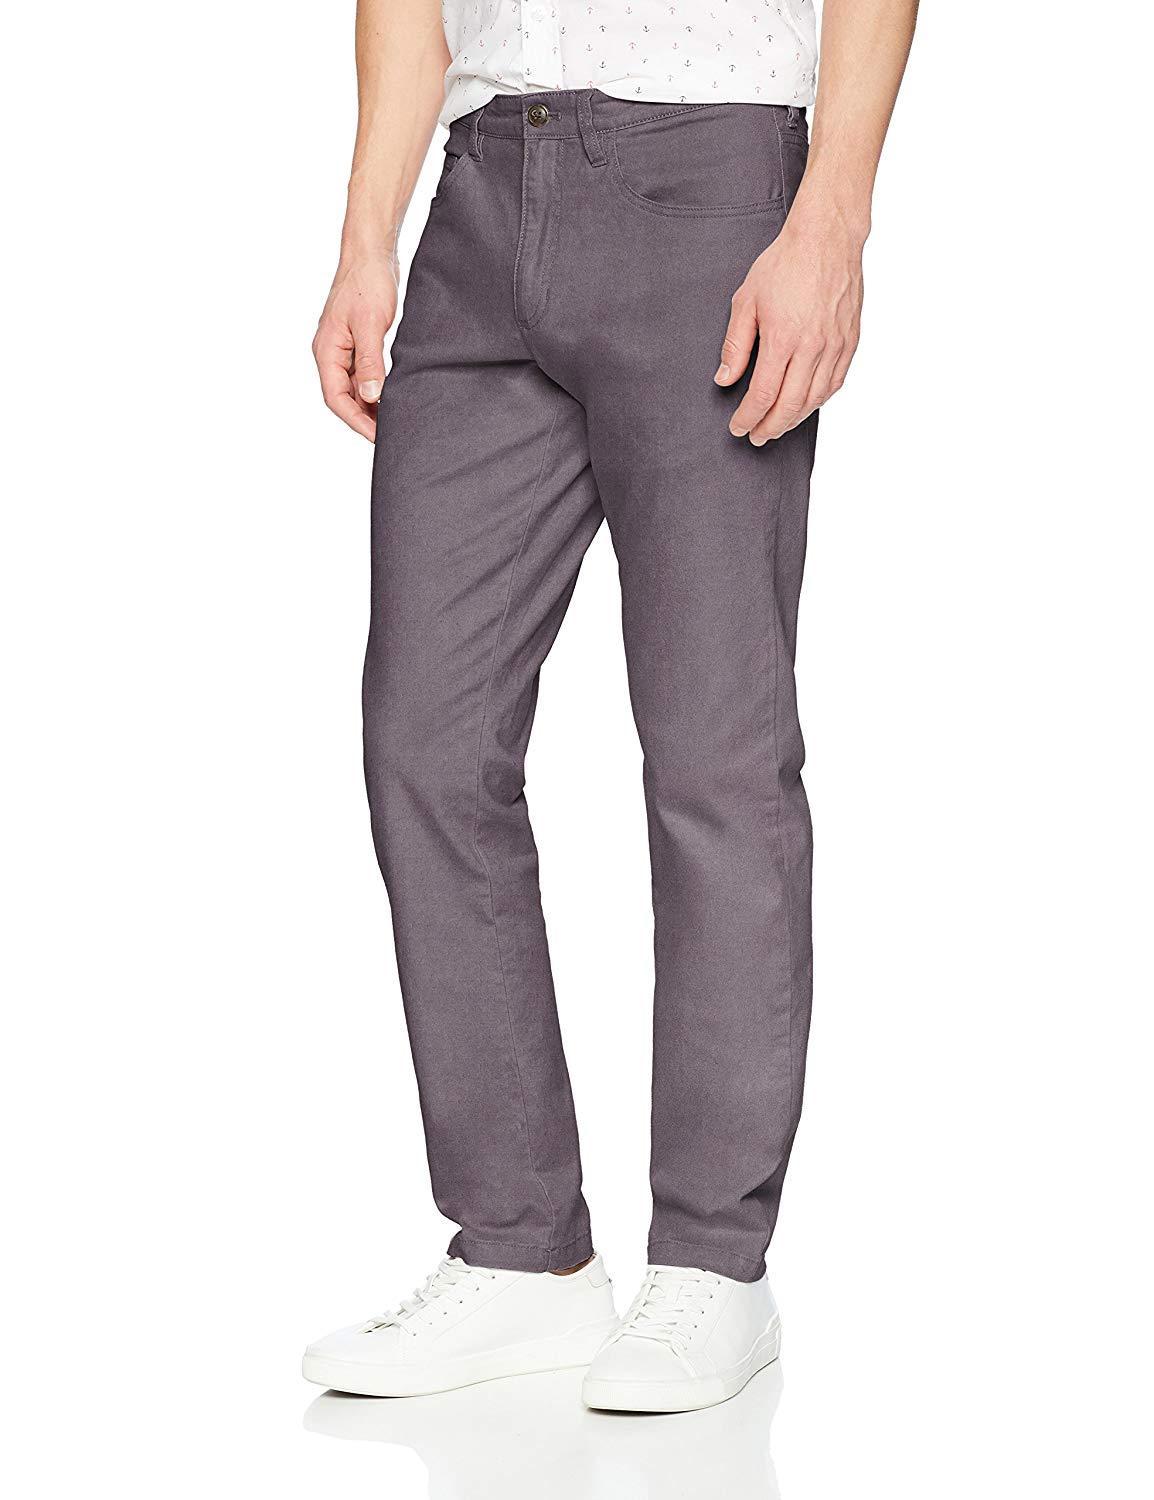 Goodthreads Men's Slim-Fit 5-Pocket Chino Pant, Grey, 33W, Grey, Size